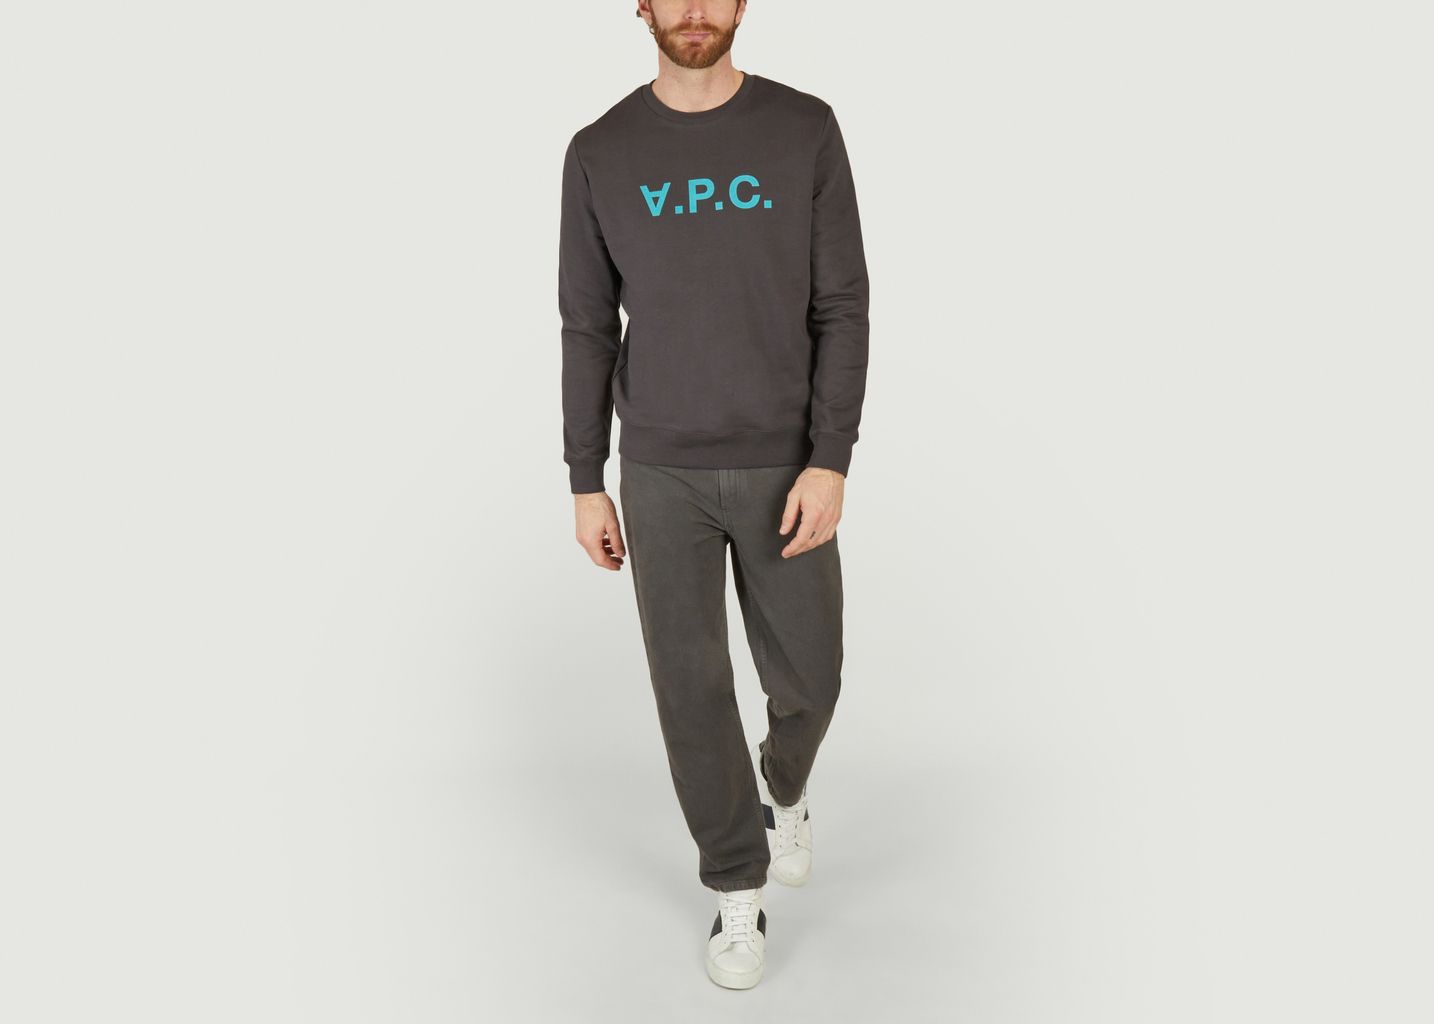 VPC sweatshirt - A.P.C.